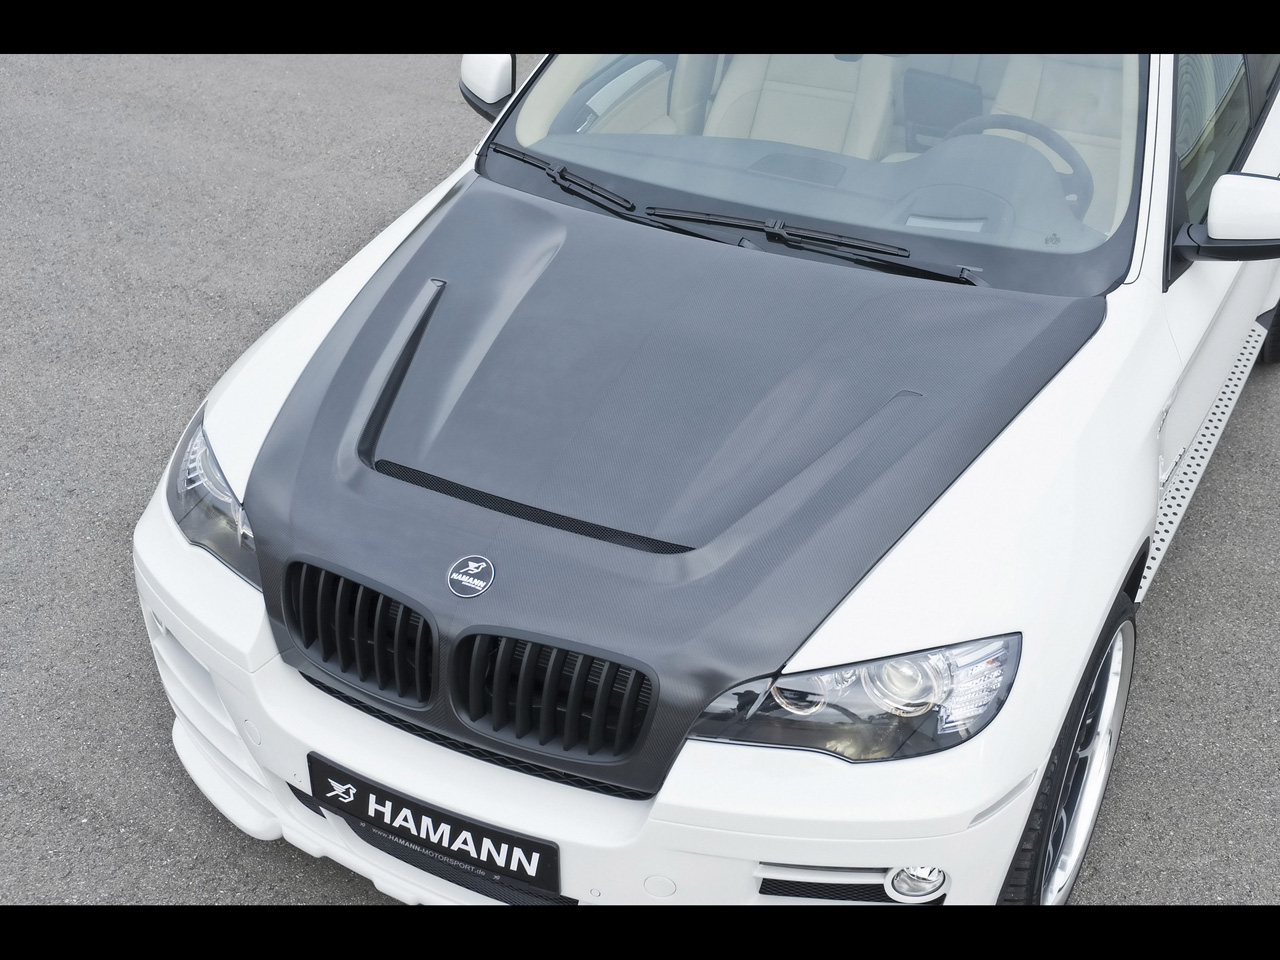 2009 Hamann BMW X6